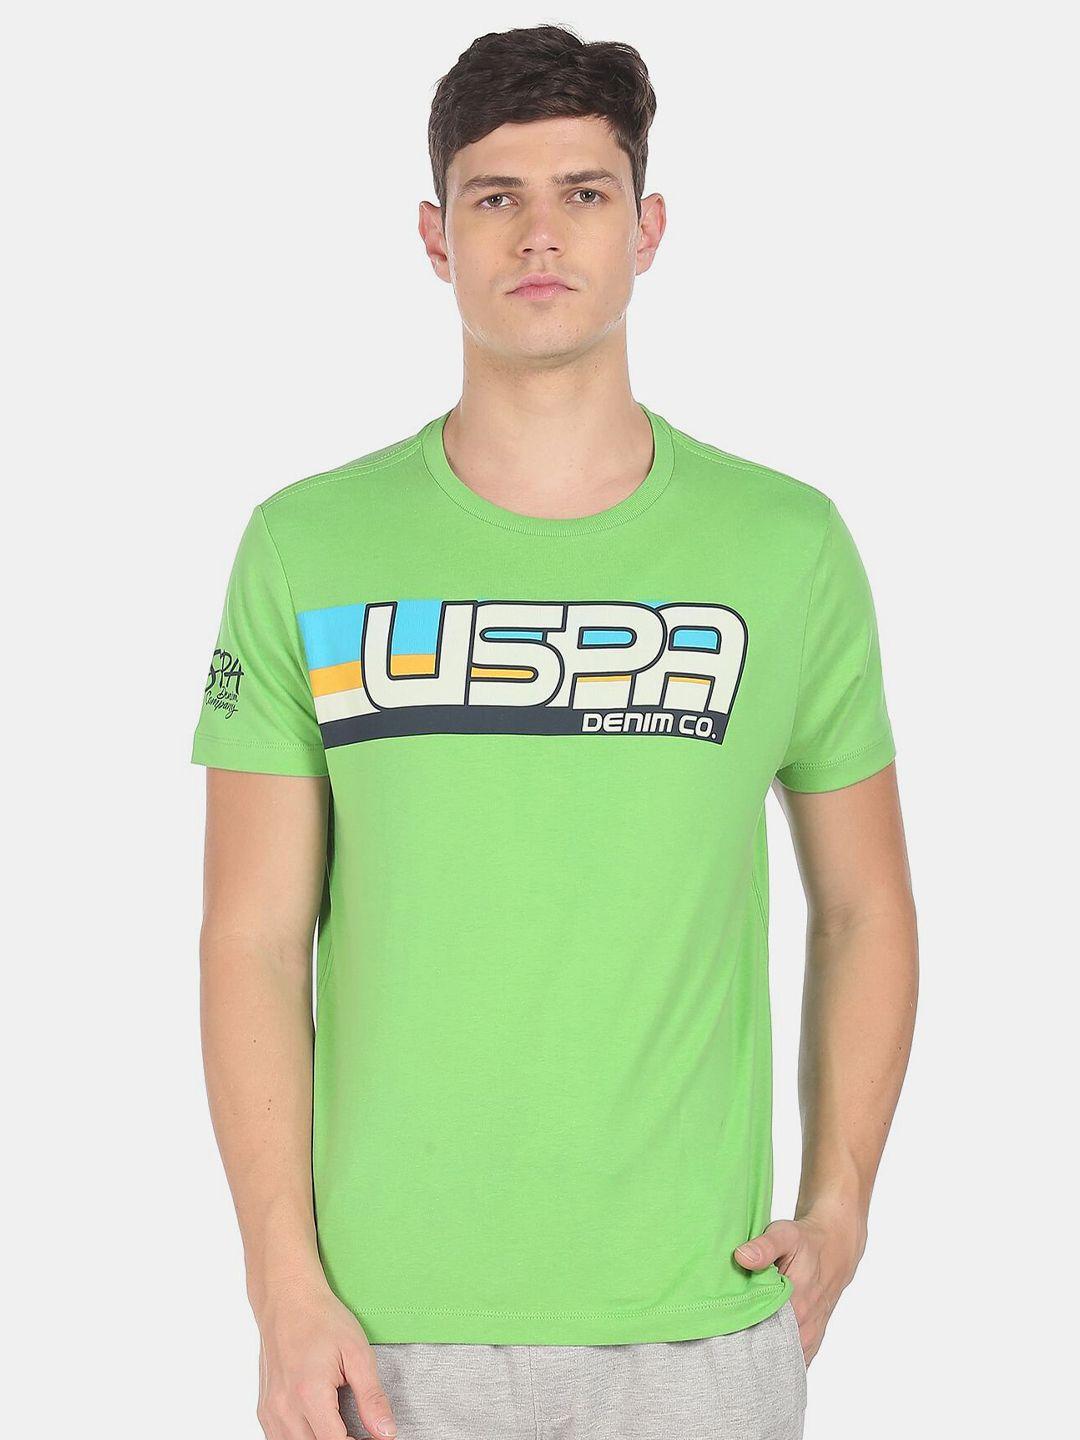 u.s. polo assn. denim co. men green & white brand logo printed pure cotton t-shirt